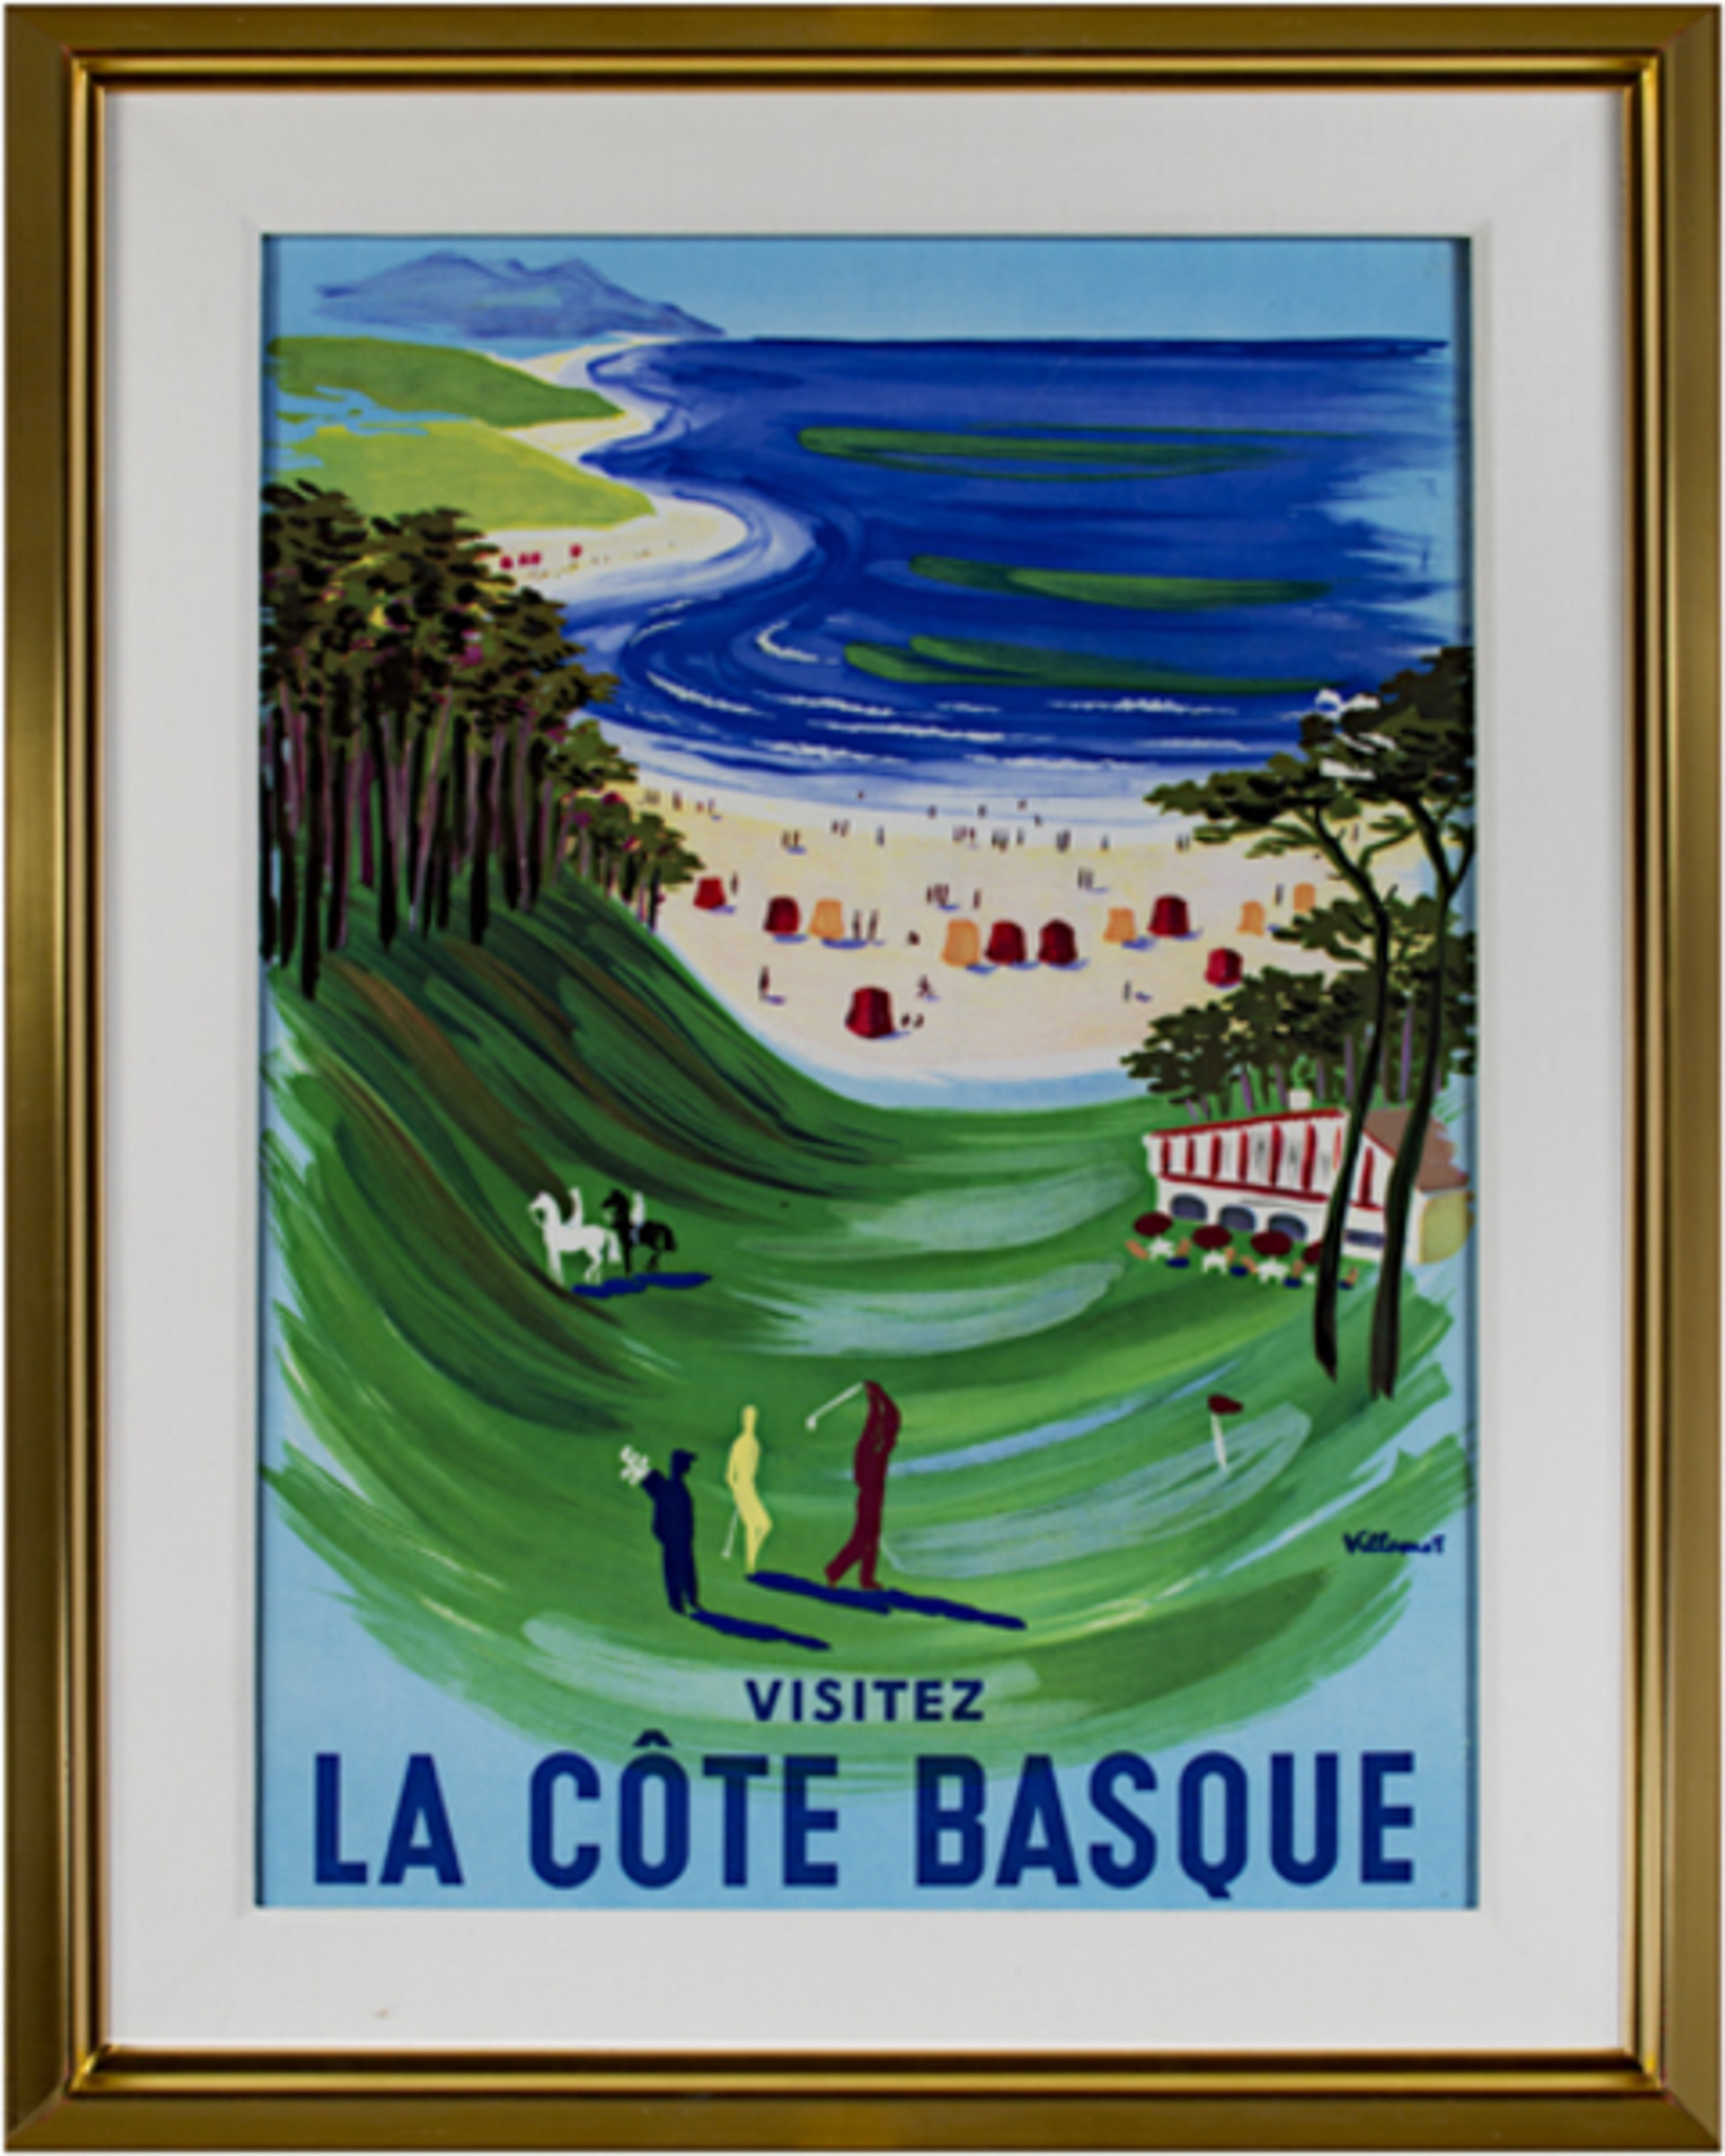 La Cote Basque (golf) by Bernard Villemot